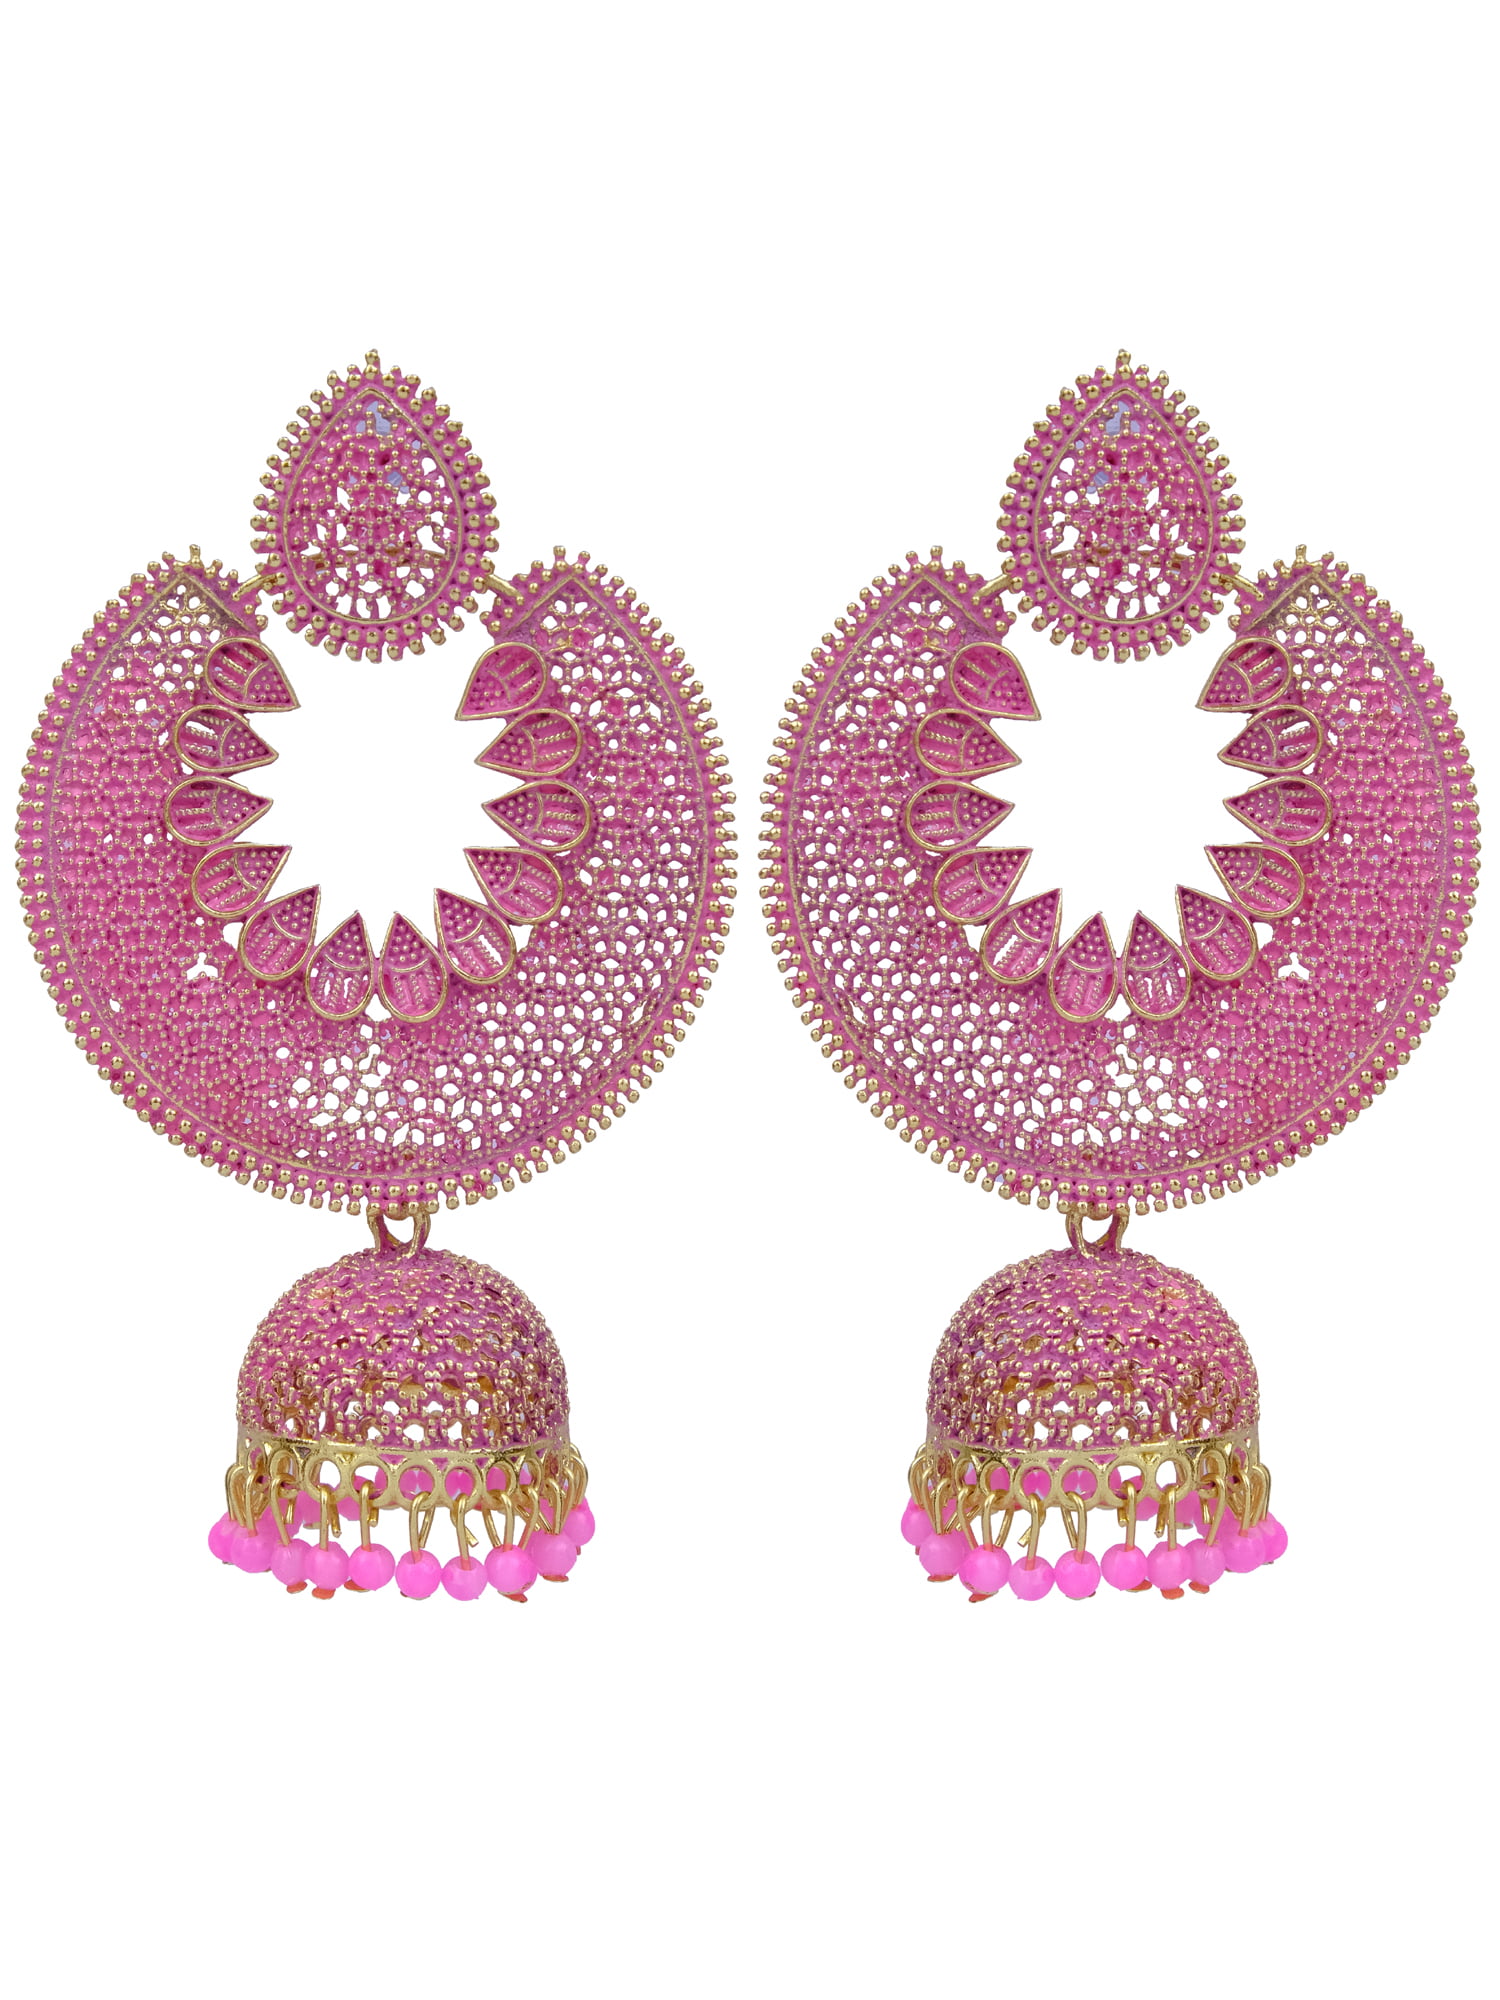 Indian Gold Plated Earrings Statement Earrings Bollywood Jewelry Designer Earrings